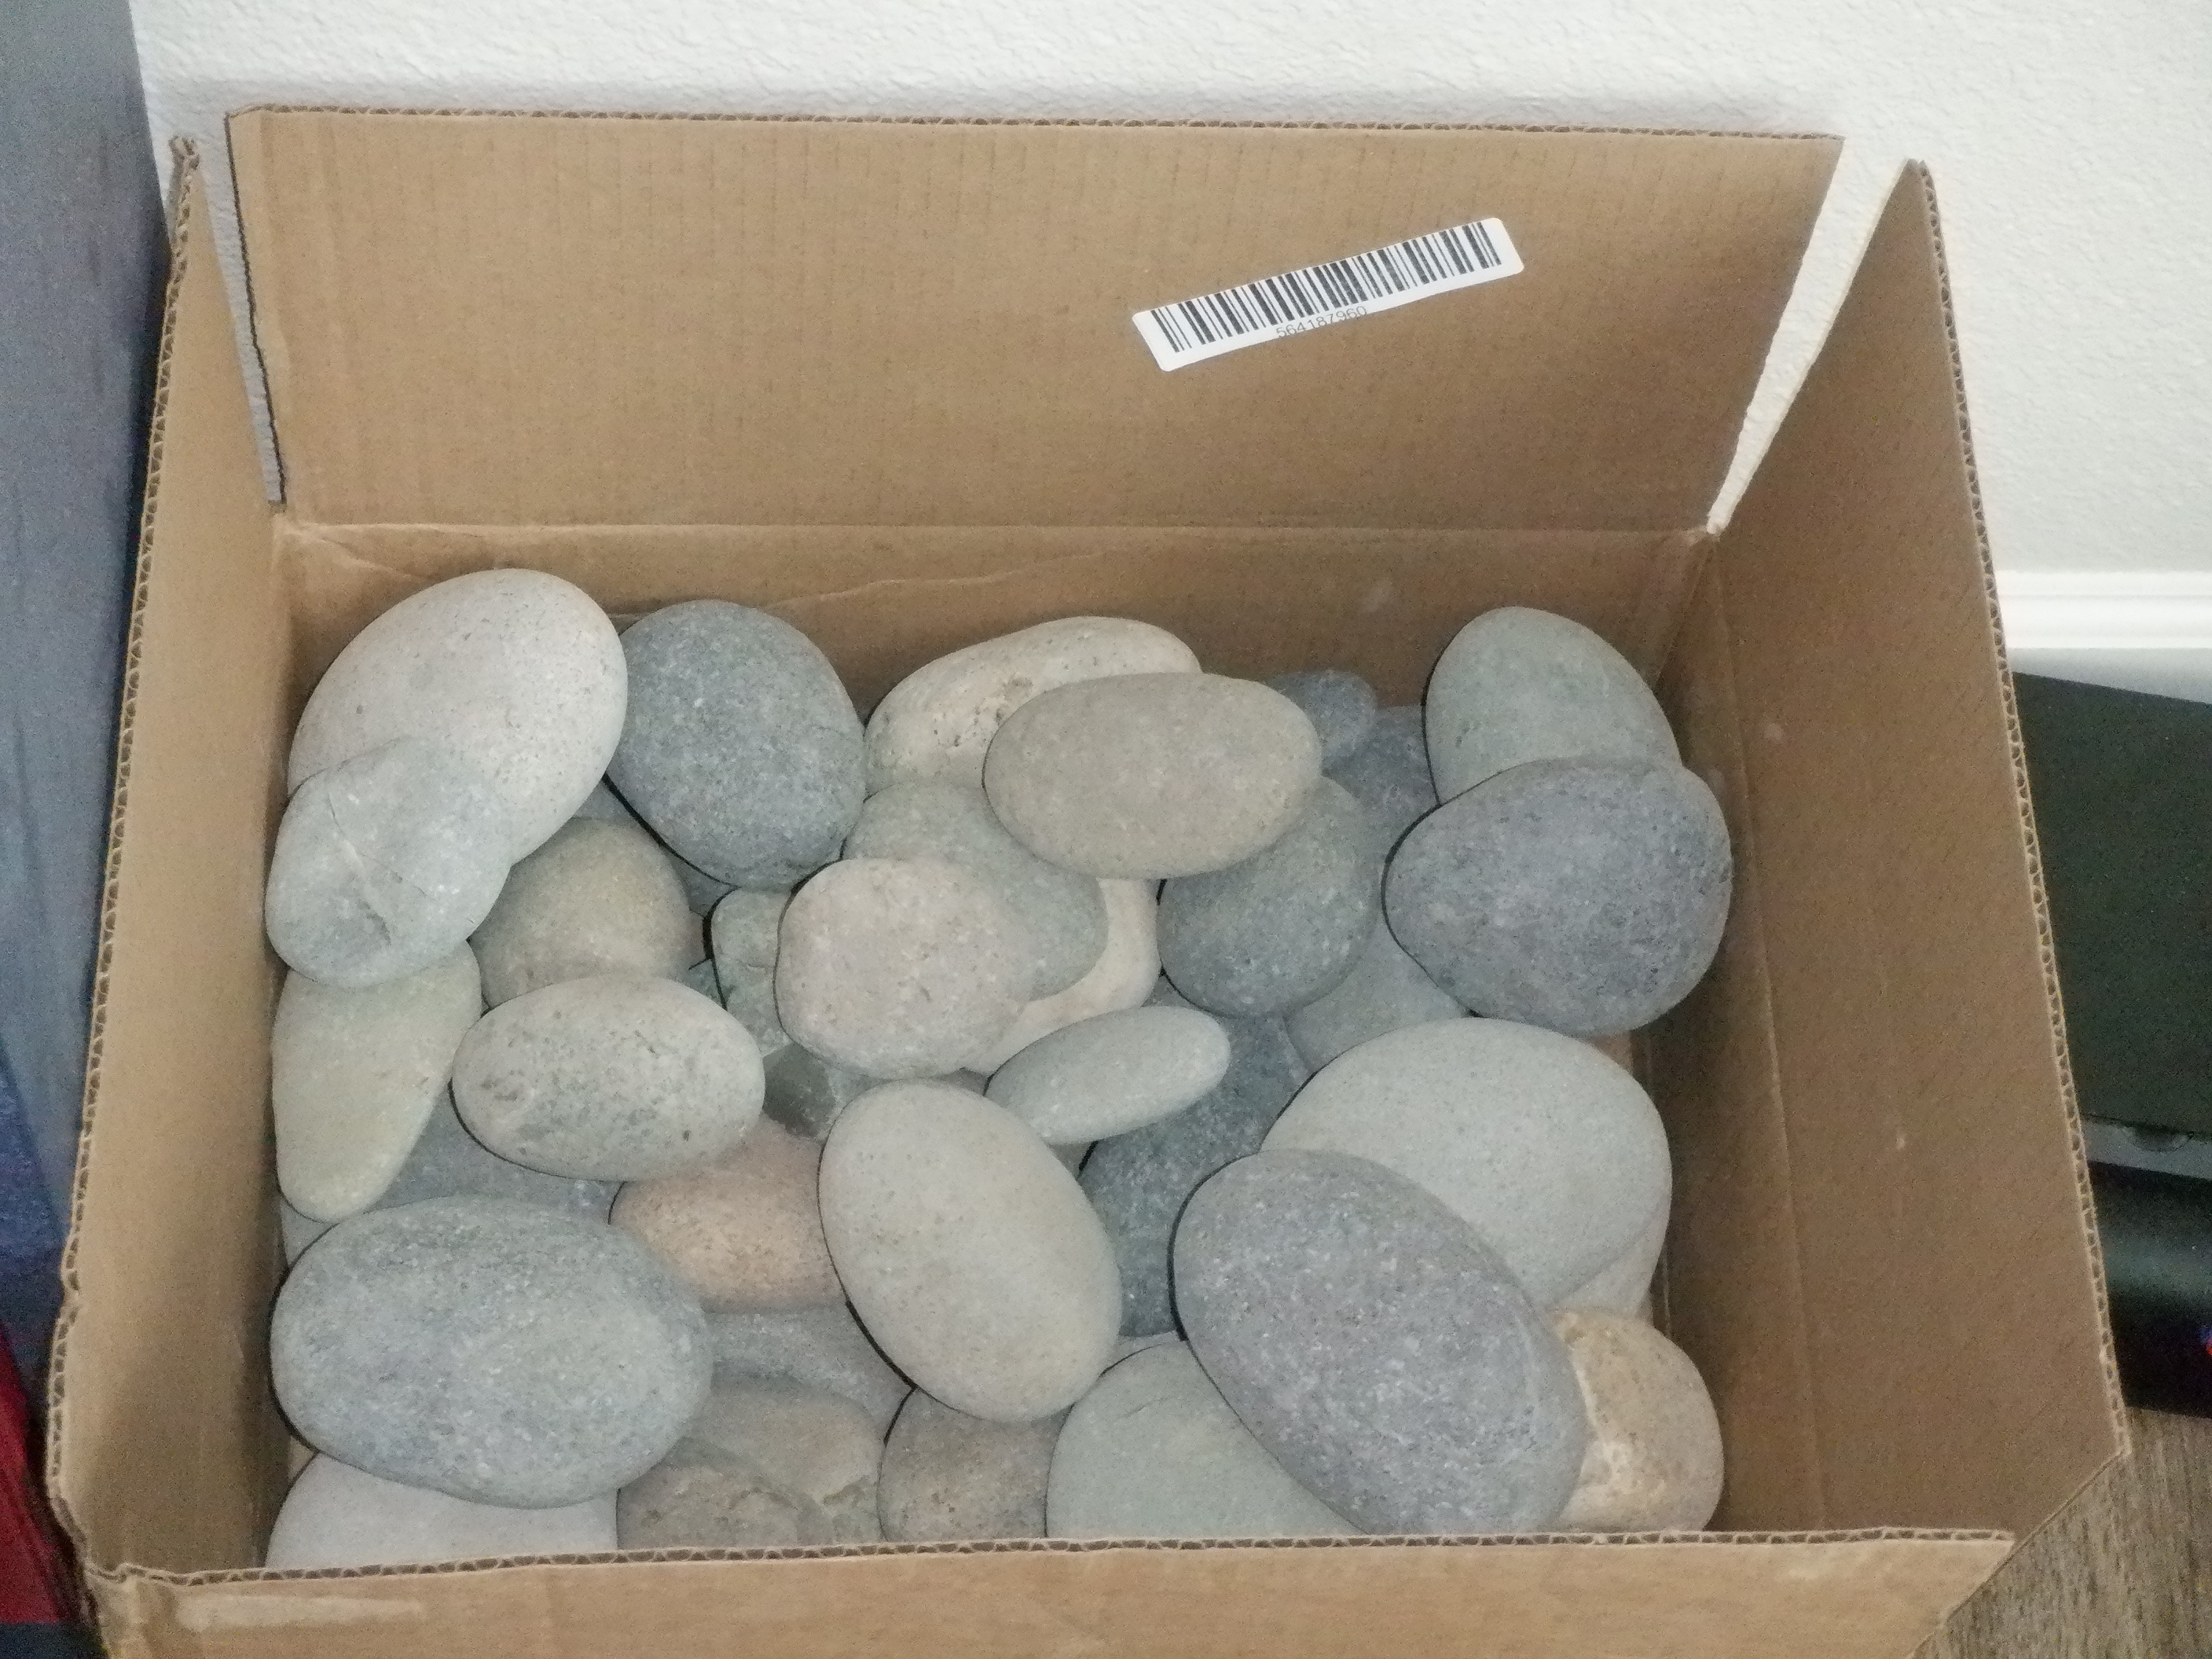 Photo I took of rocks in a box